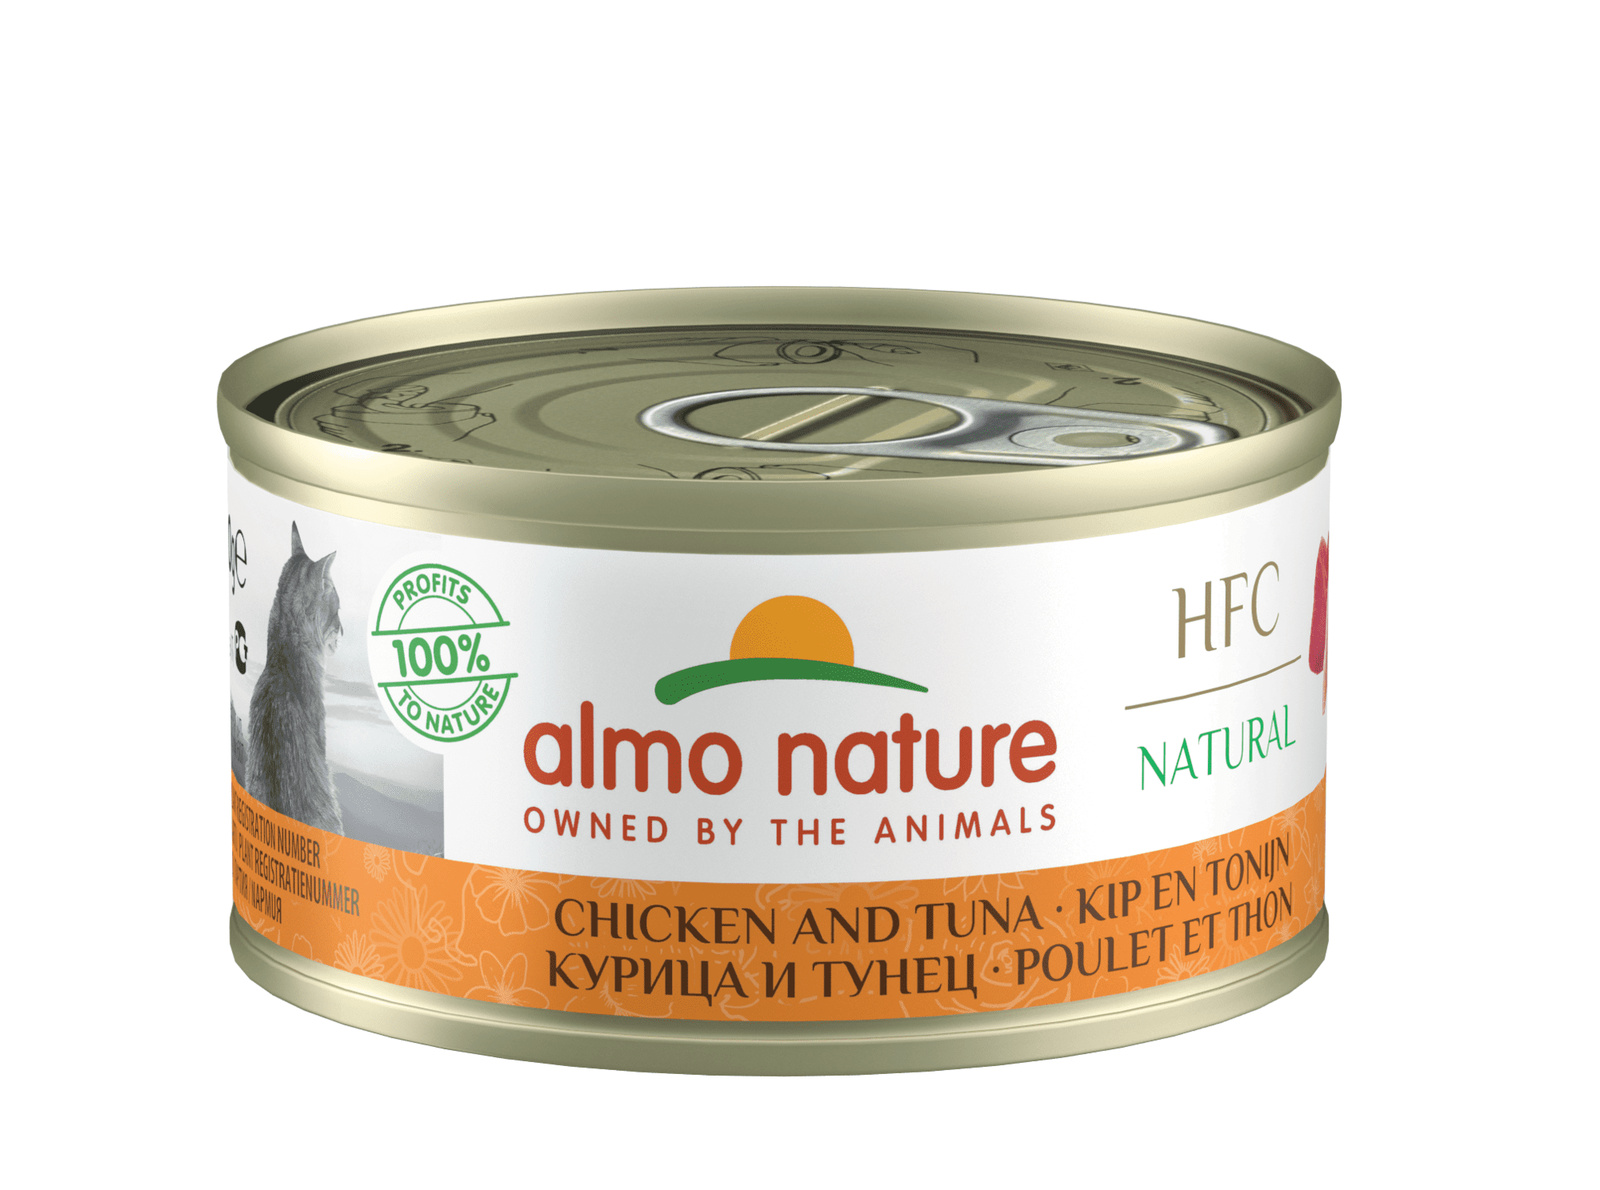 Almo Nature консервы Almo Nature консервы для кошек, с курицей и тунцом, 75% мяса (1,68 кг) almo nature консервы almo nature консервы для кошек с тихоокеанским тунцом 1 68 кг